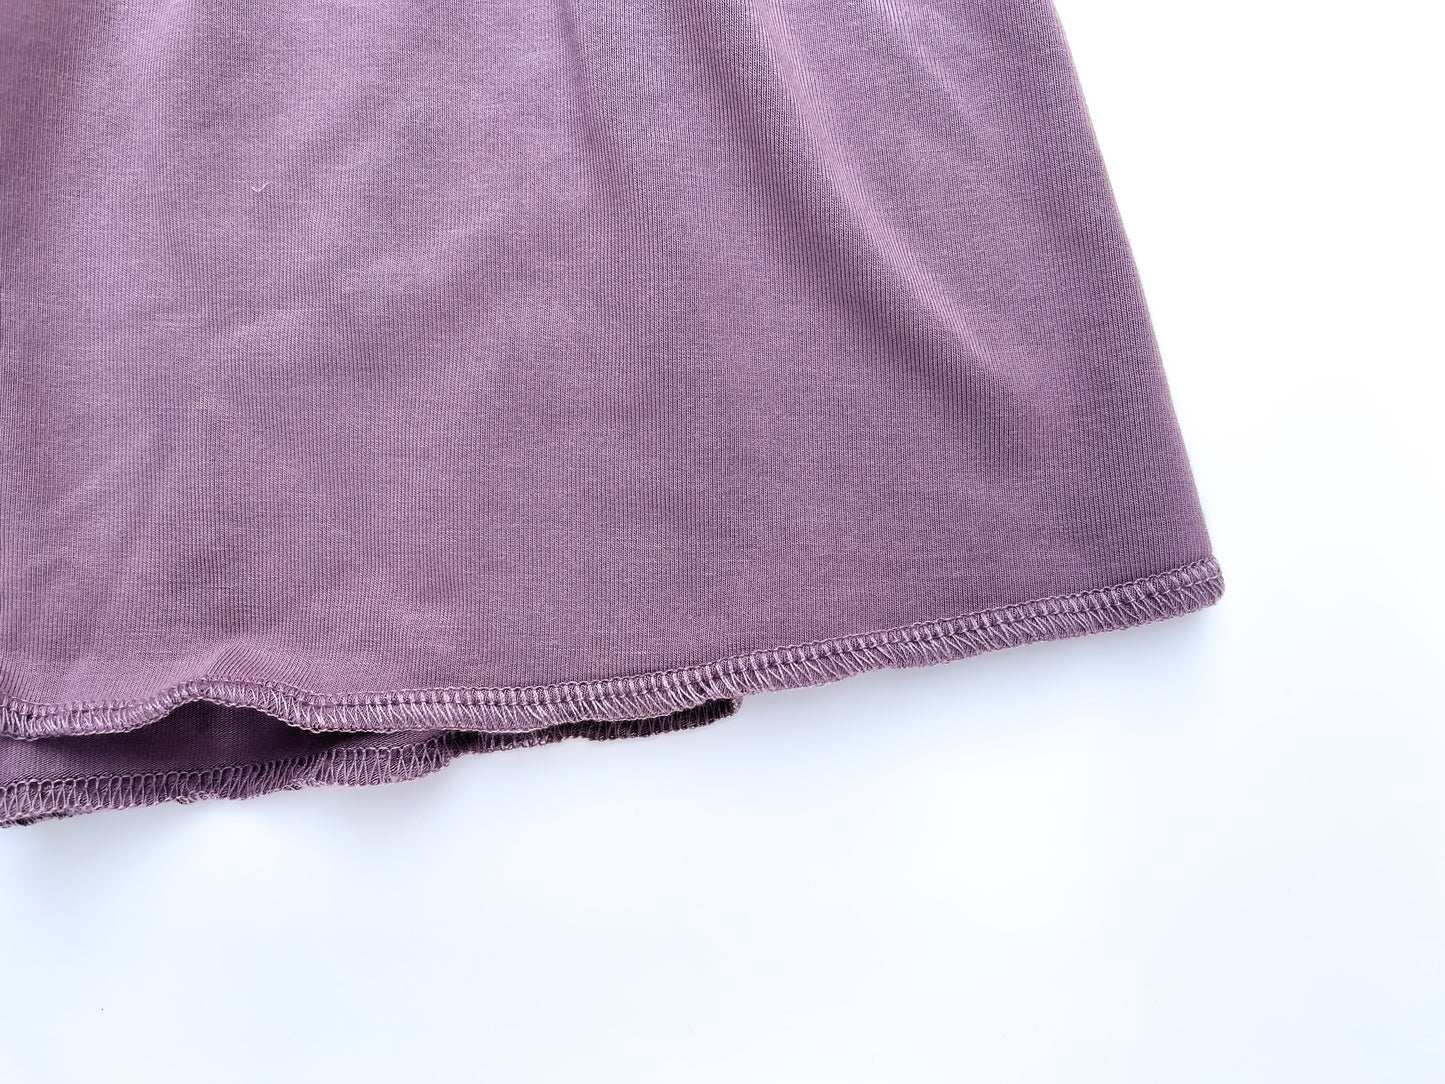 Peplum Skirt | Lavender - One Kind Clothing, LLC